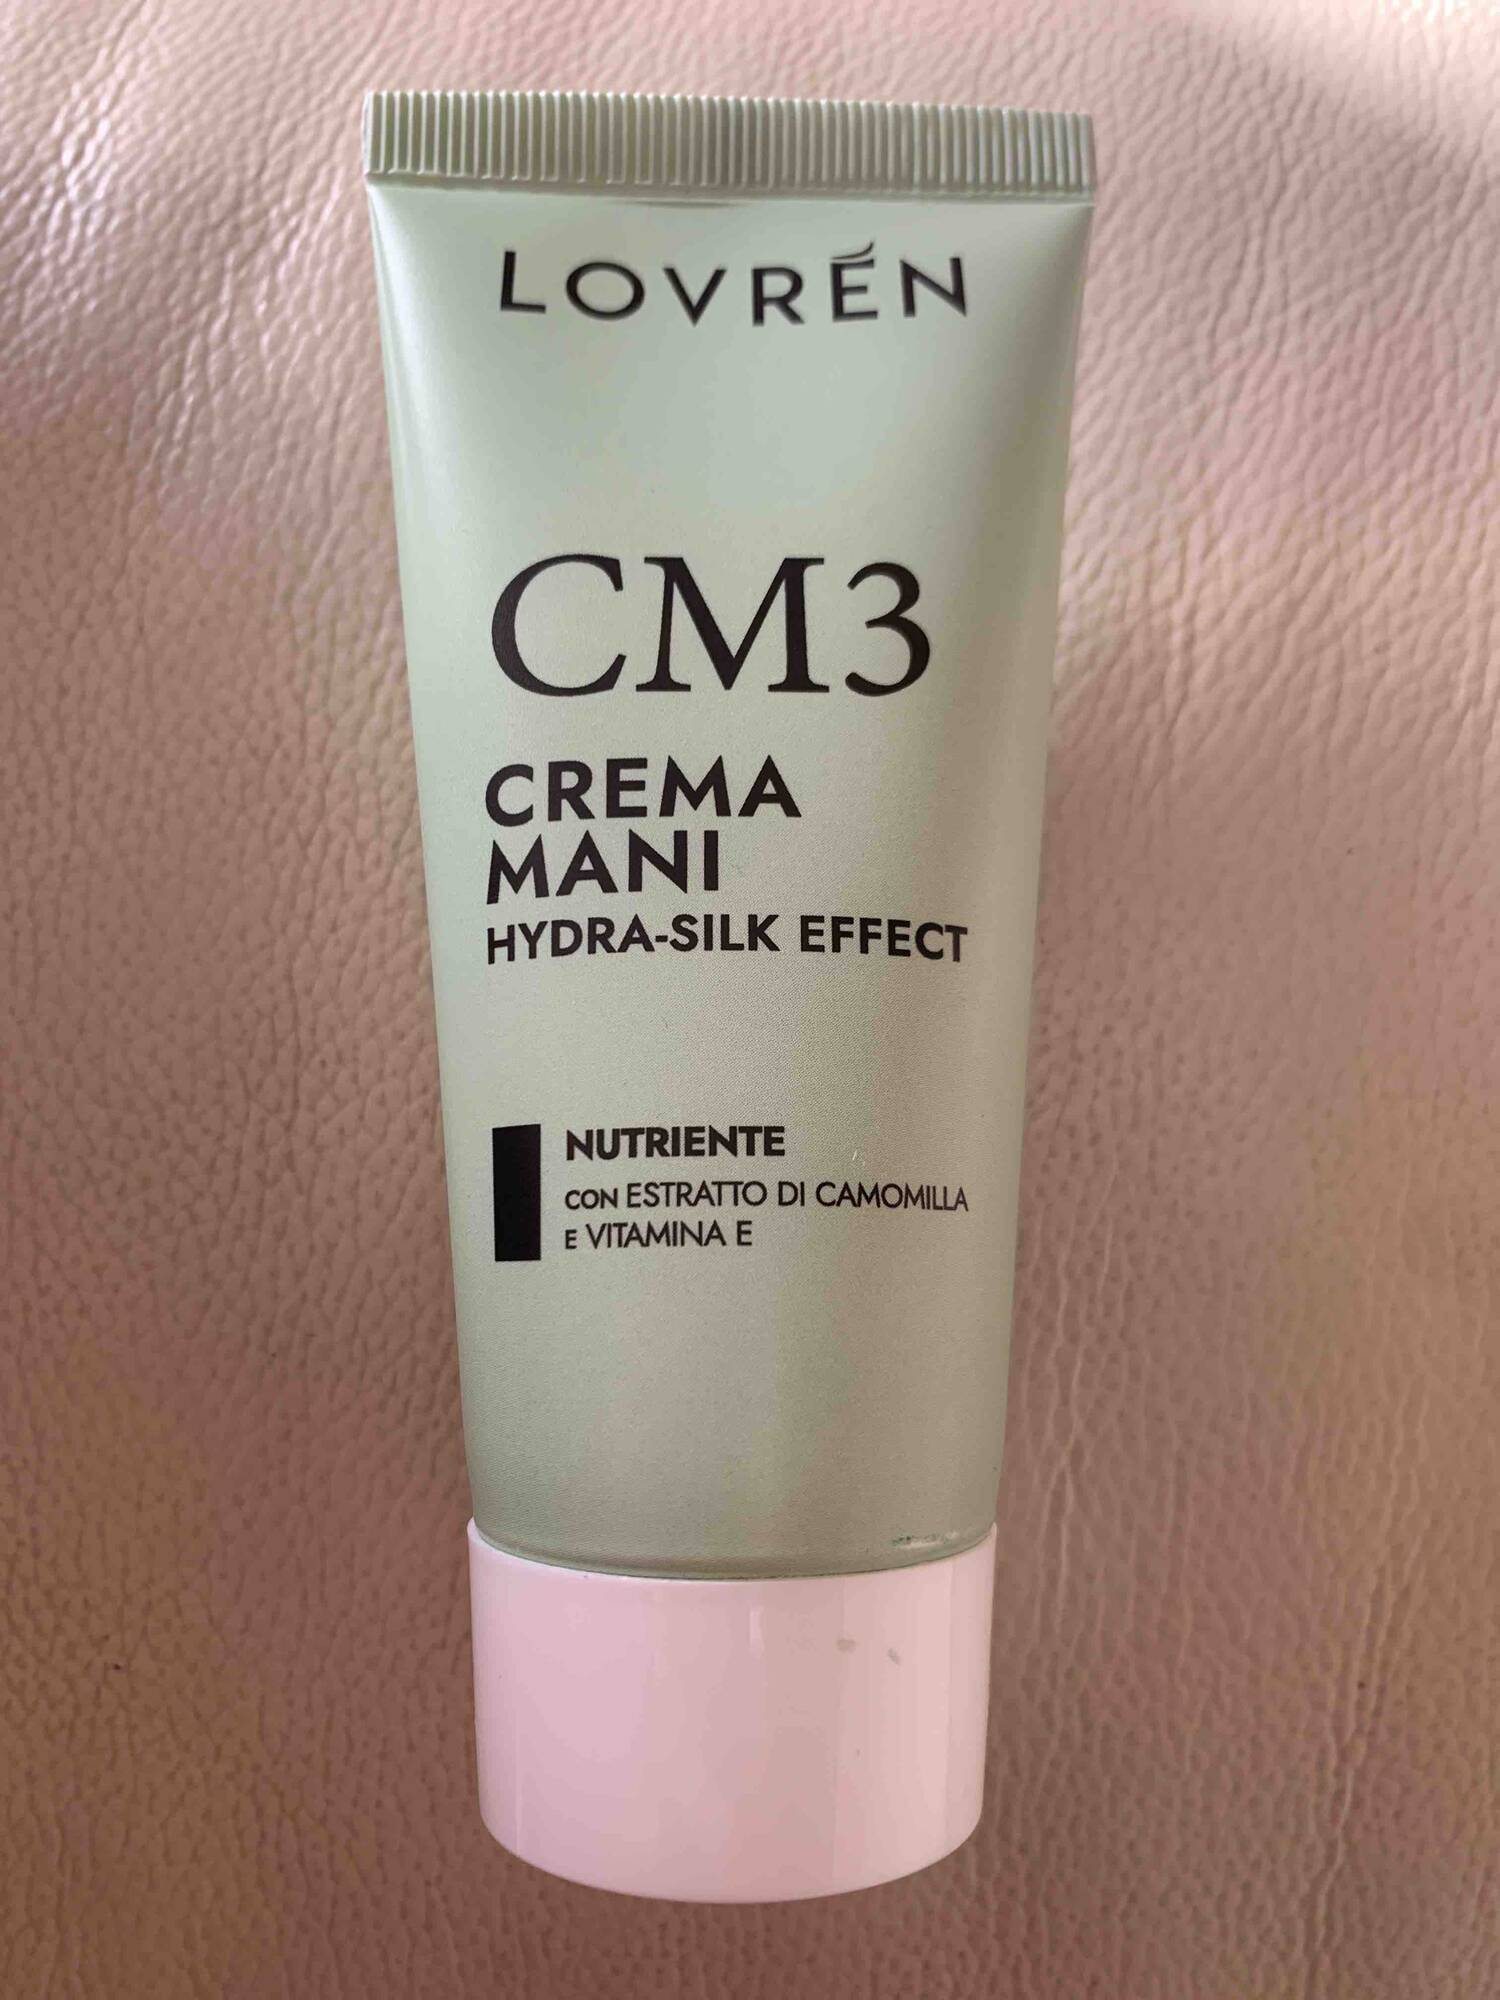 LOVREN - CM3 - Crema mani hydra-silk effect